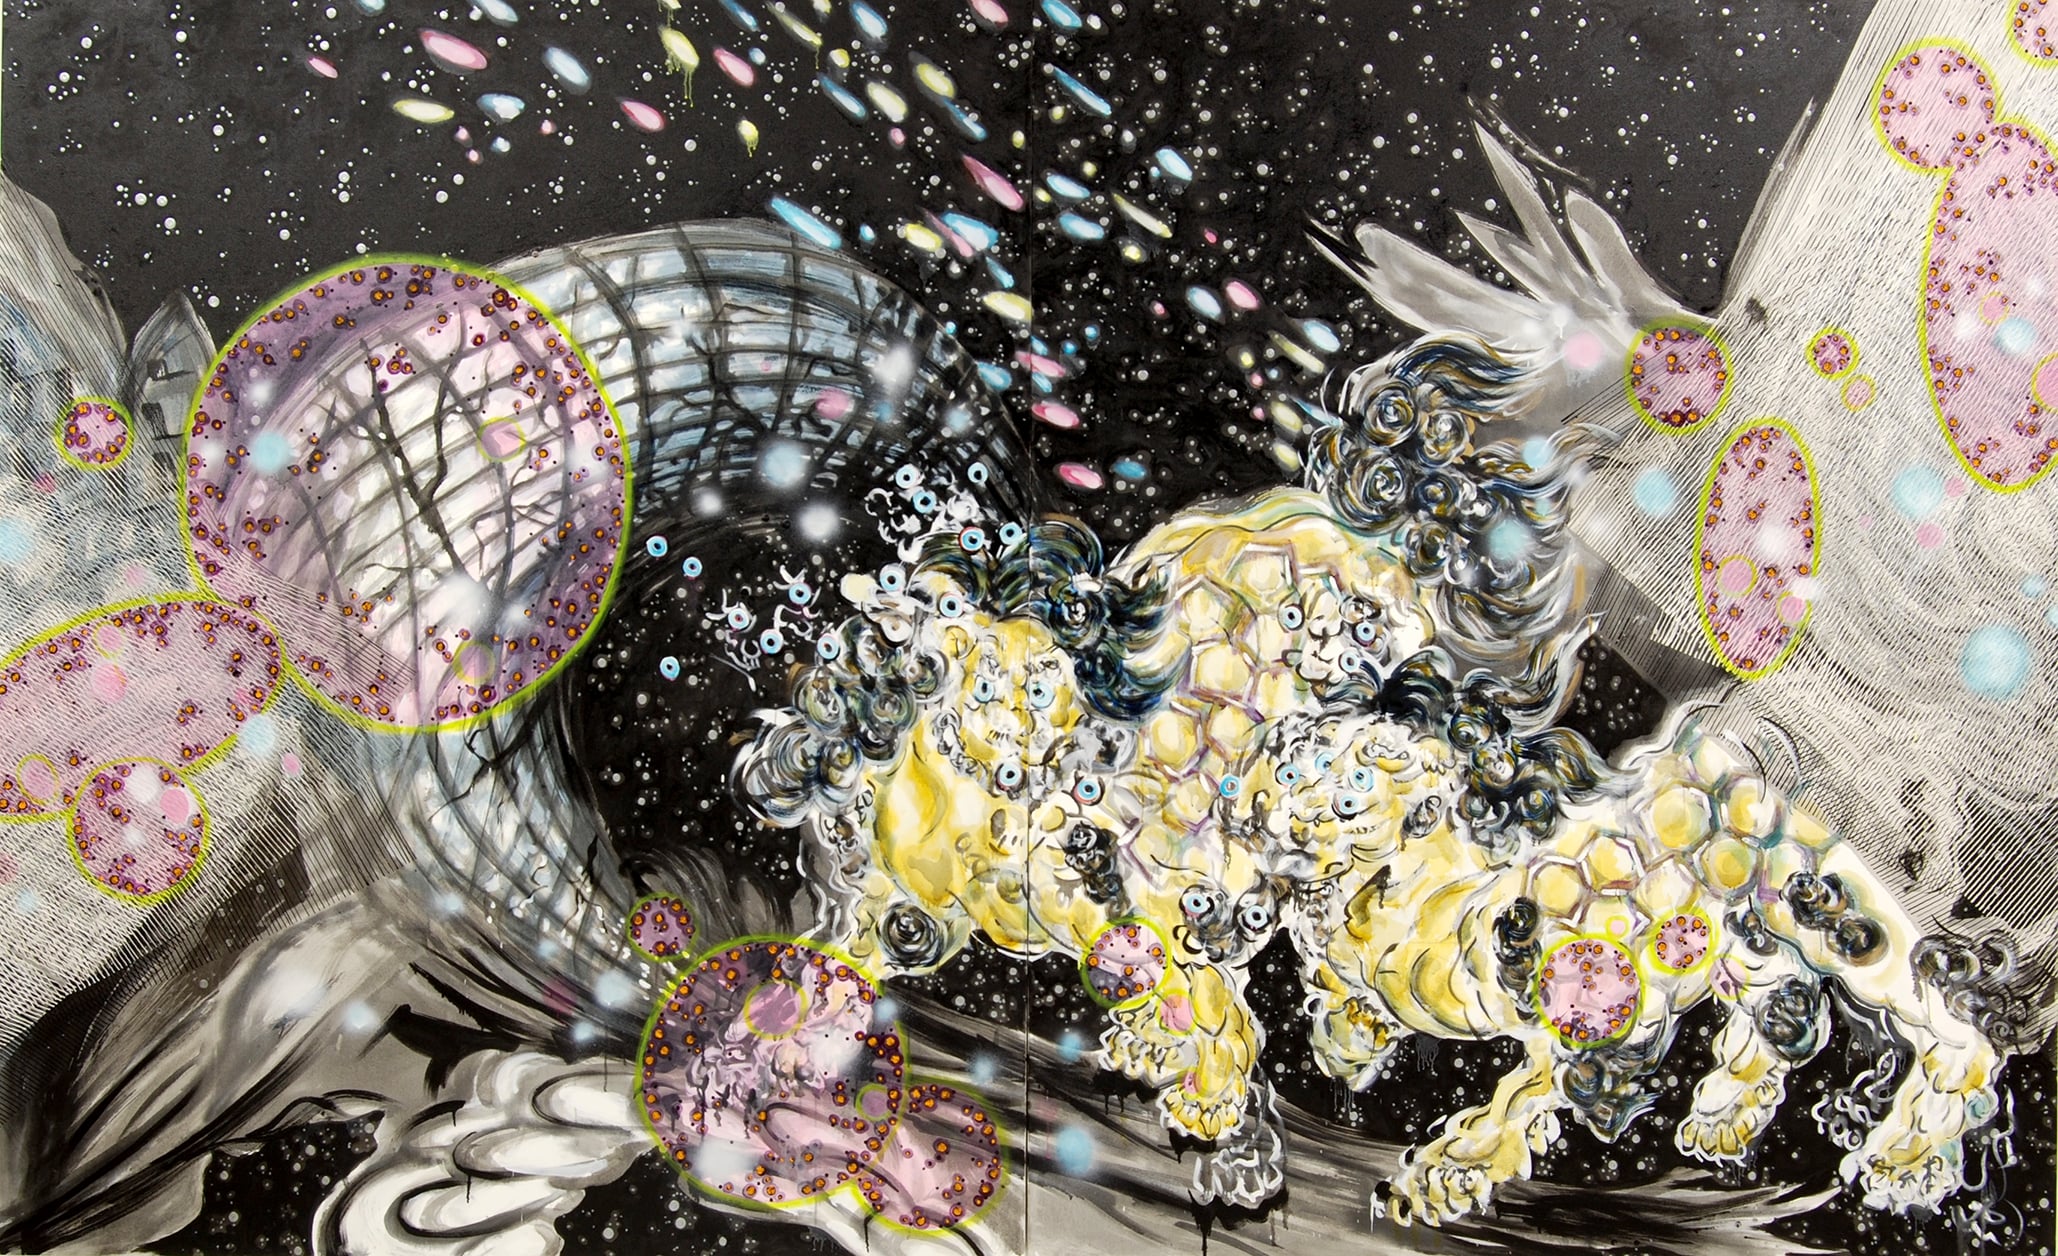 Image: "Cosmic Wanderlust" painting from Virtual Eitoku 2013 96"x154". Sumi ink & oil on canvas. Image courtesy of Michiko Itatani.